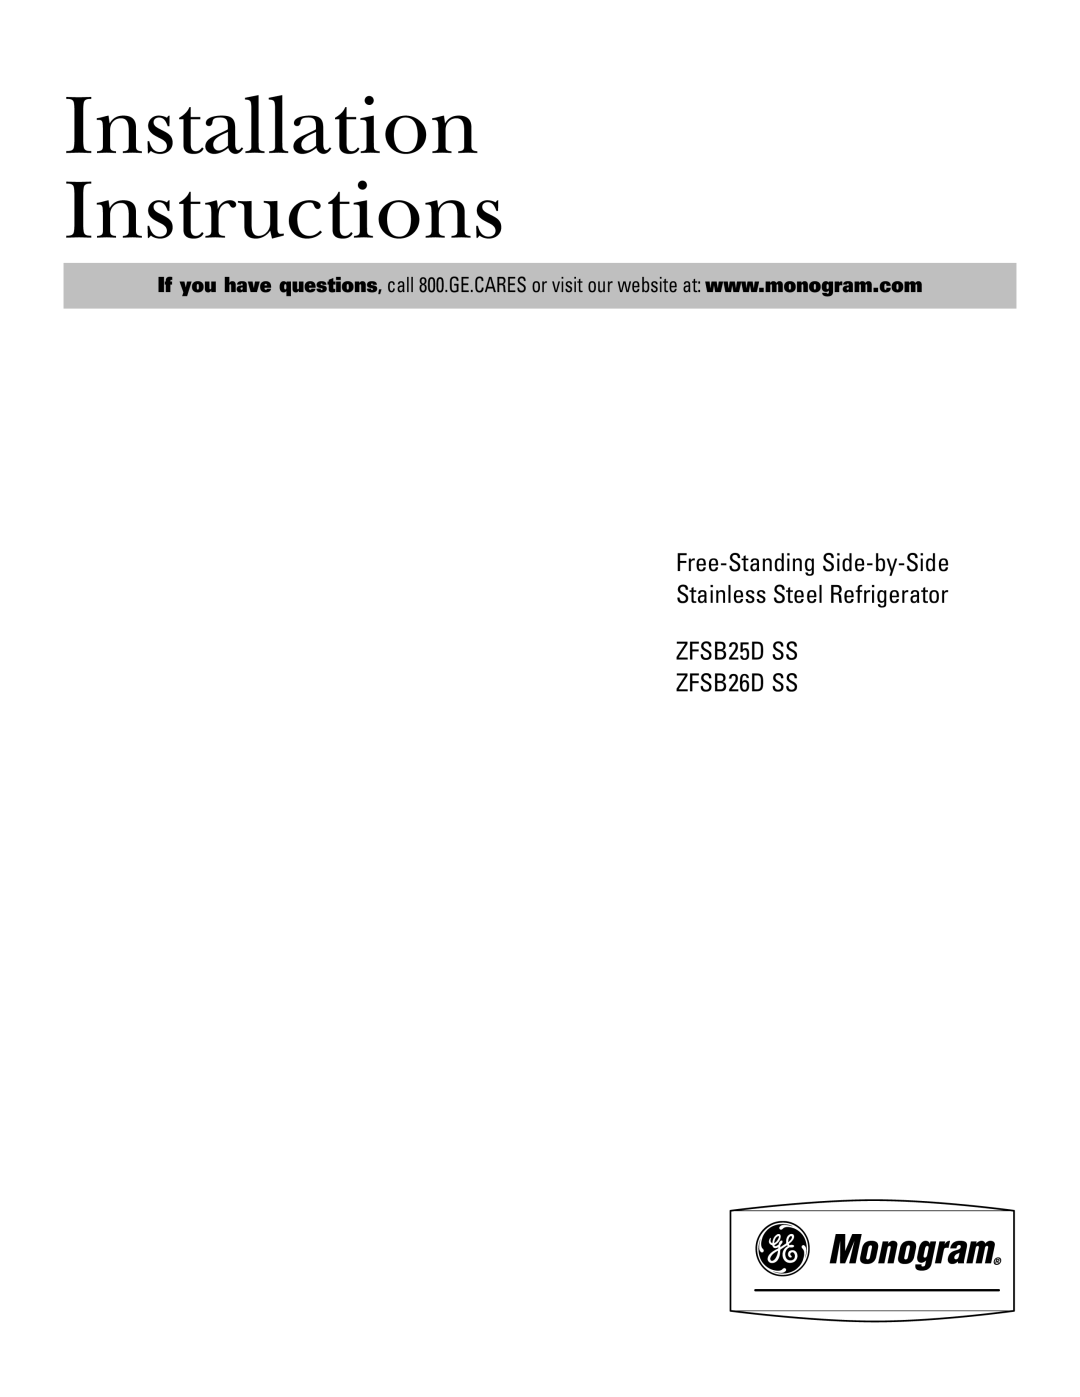 GE Monogram ZFSB25D SS installation instructions Installation Instructions, ZFSB26D SS 